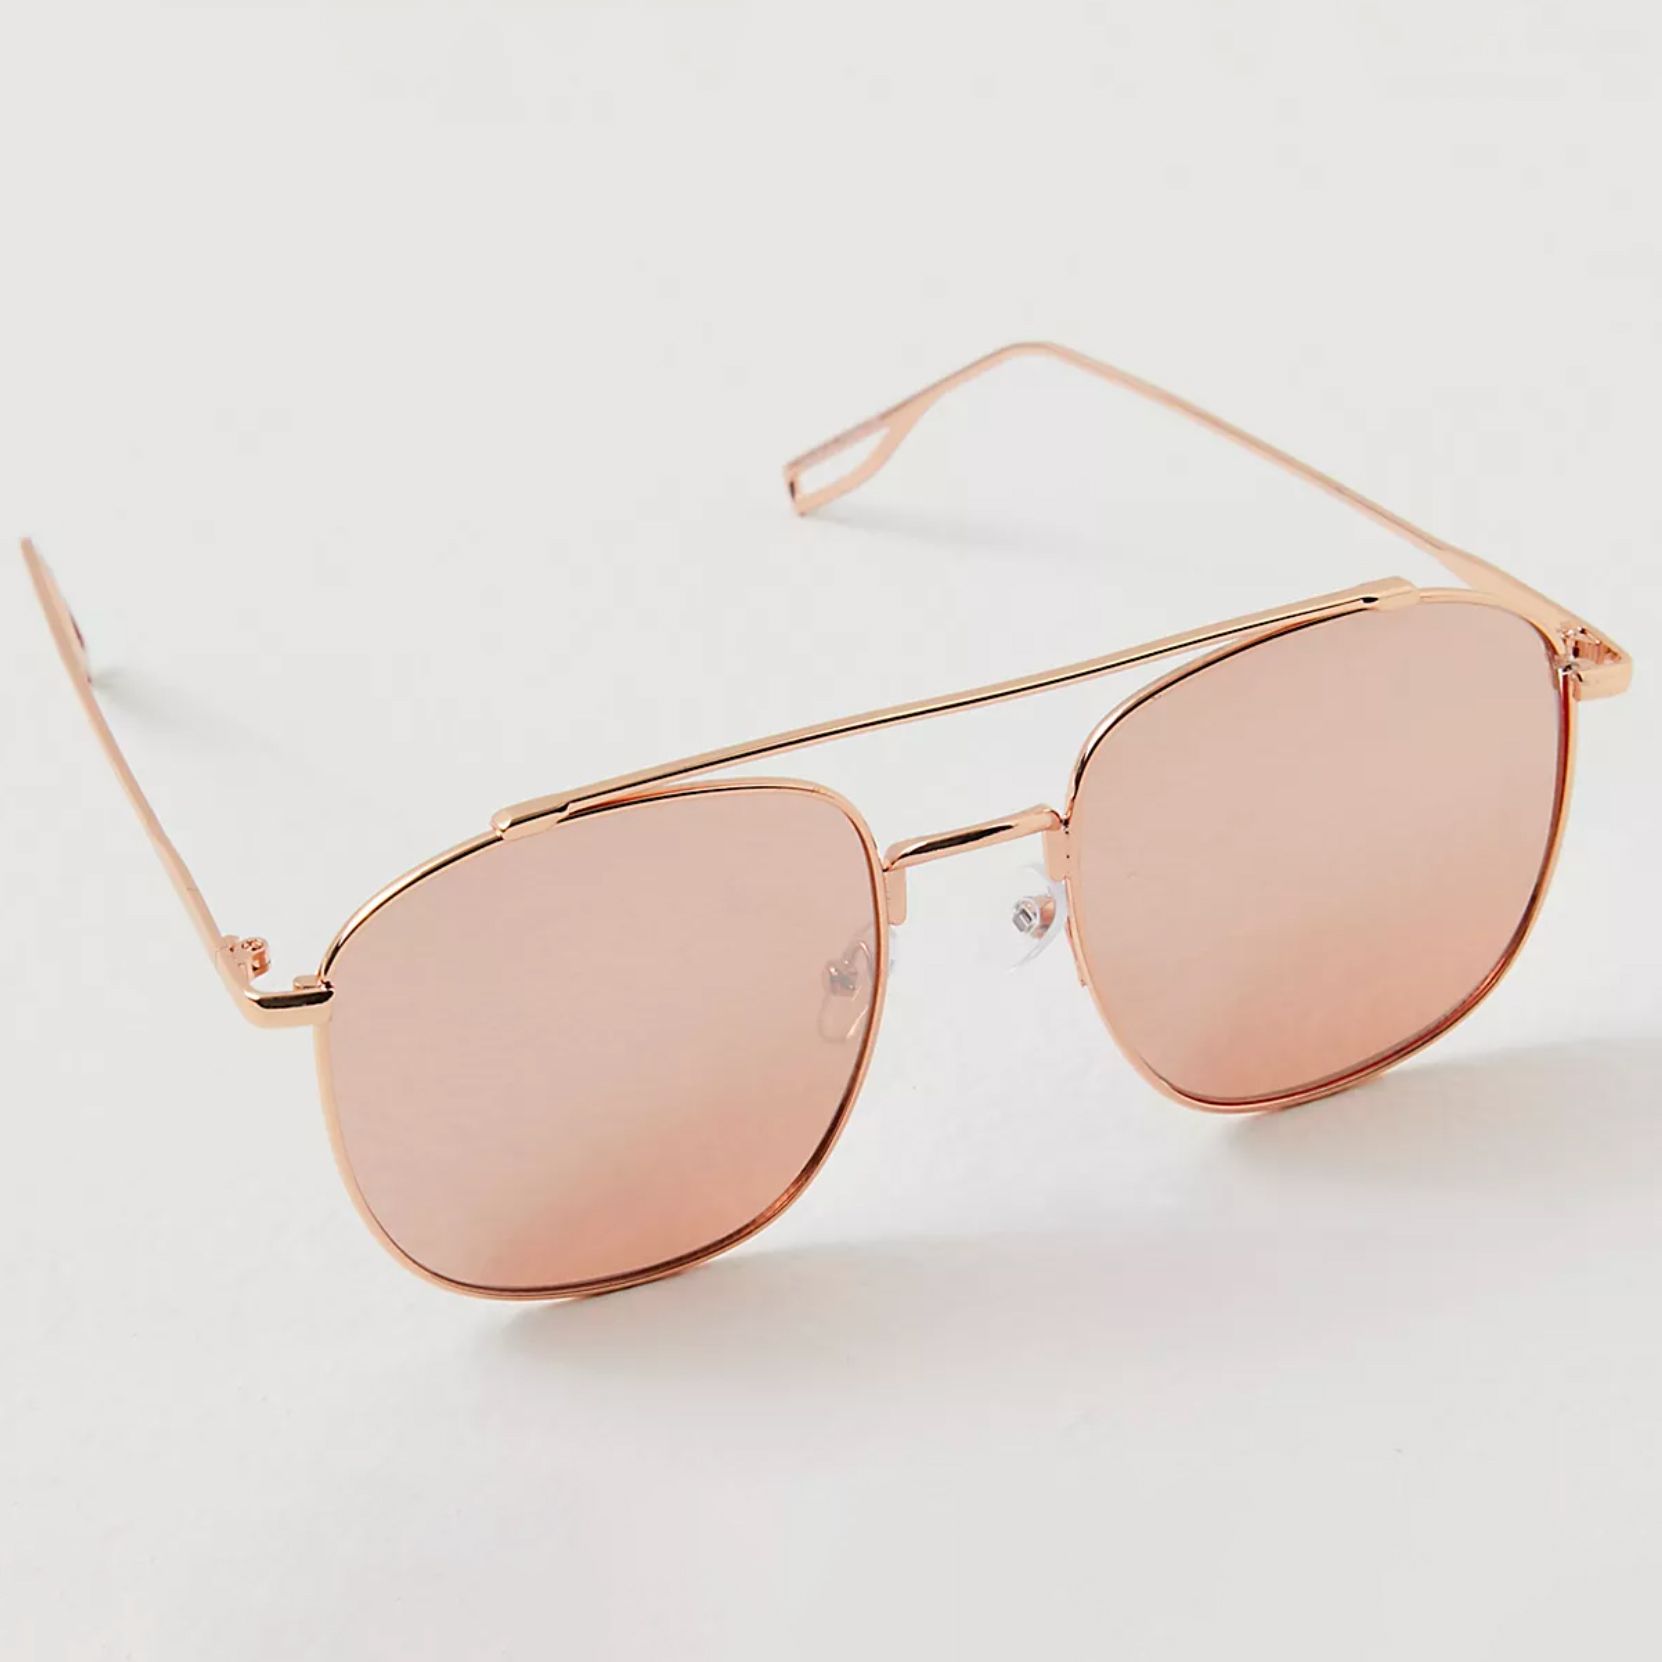 The Best Cheap Sunglasses of 2023: Sunglasses Under $100